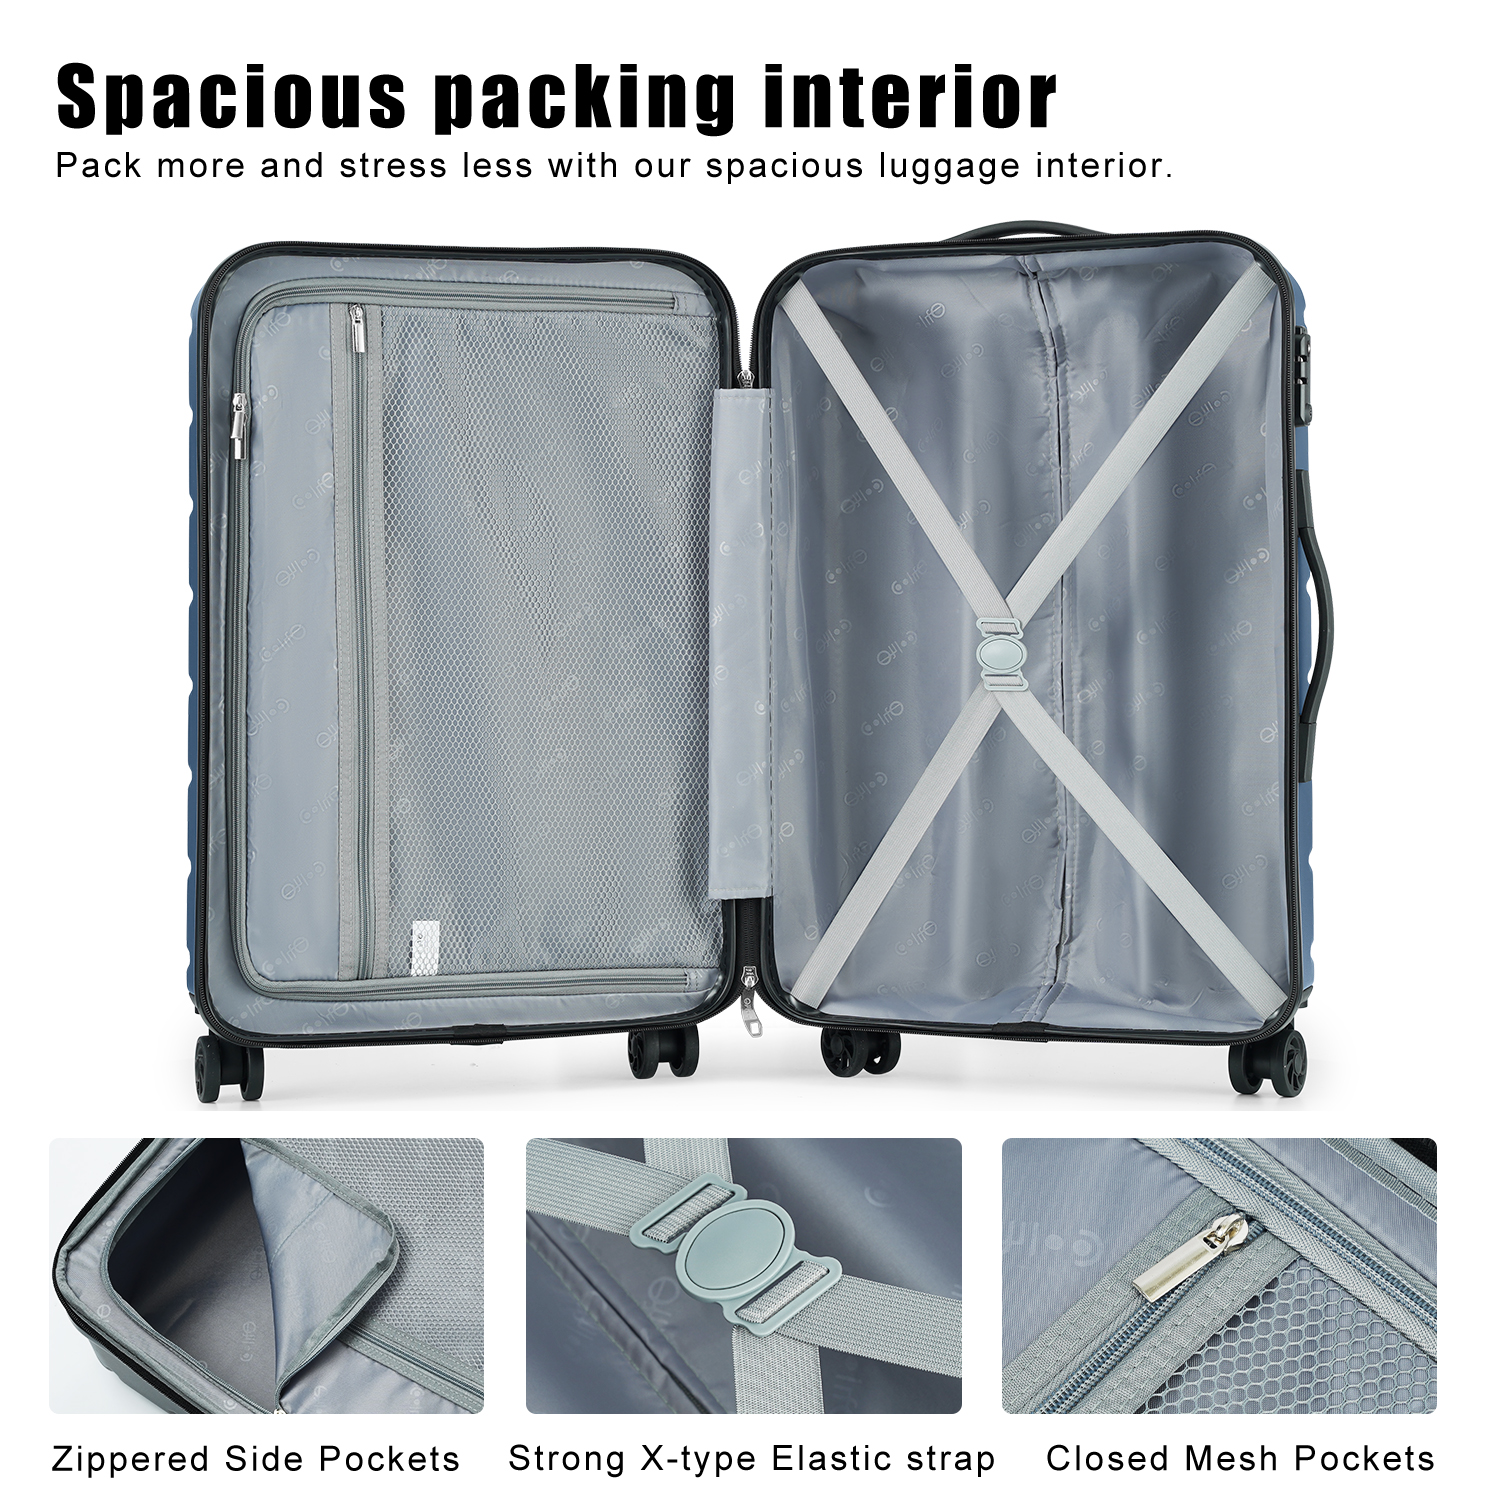 Coolife Luggage Suitcase Carry-on Spinner TSA Lock USB Port Expandable (only 28'') Lightweight Hardside Luggage